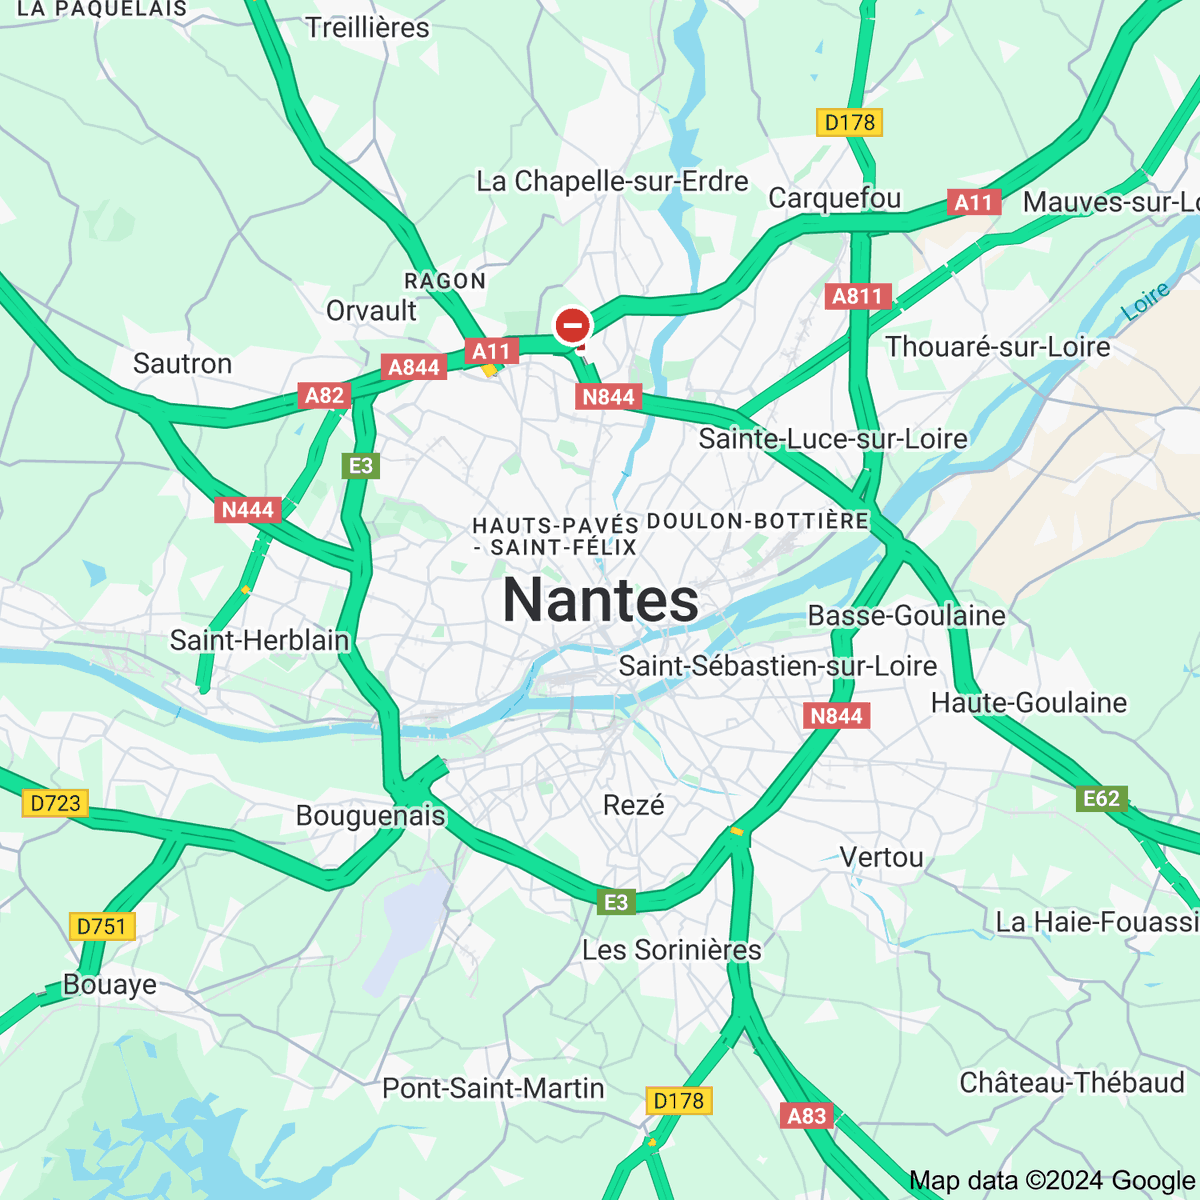 [FLASH 20:00] Trafic routier à Nantes - traficroutier.net/nantes/ #Nantes #NantesPeriph #InfoTrafic